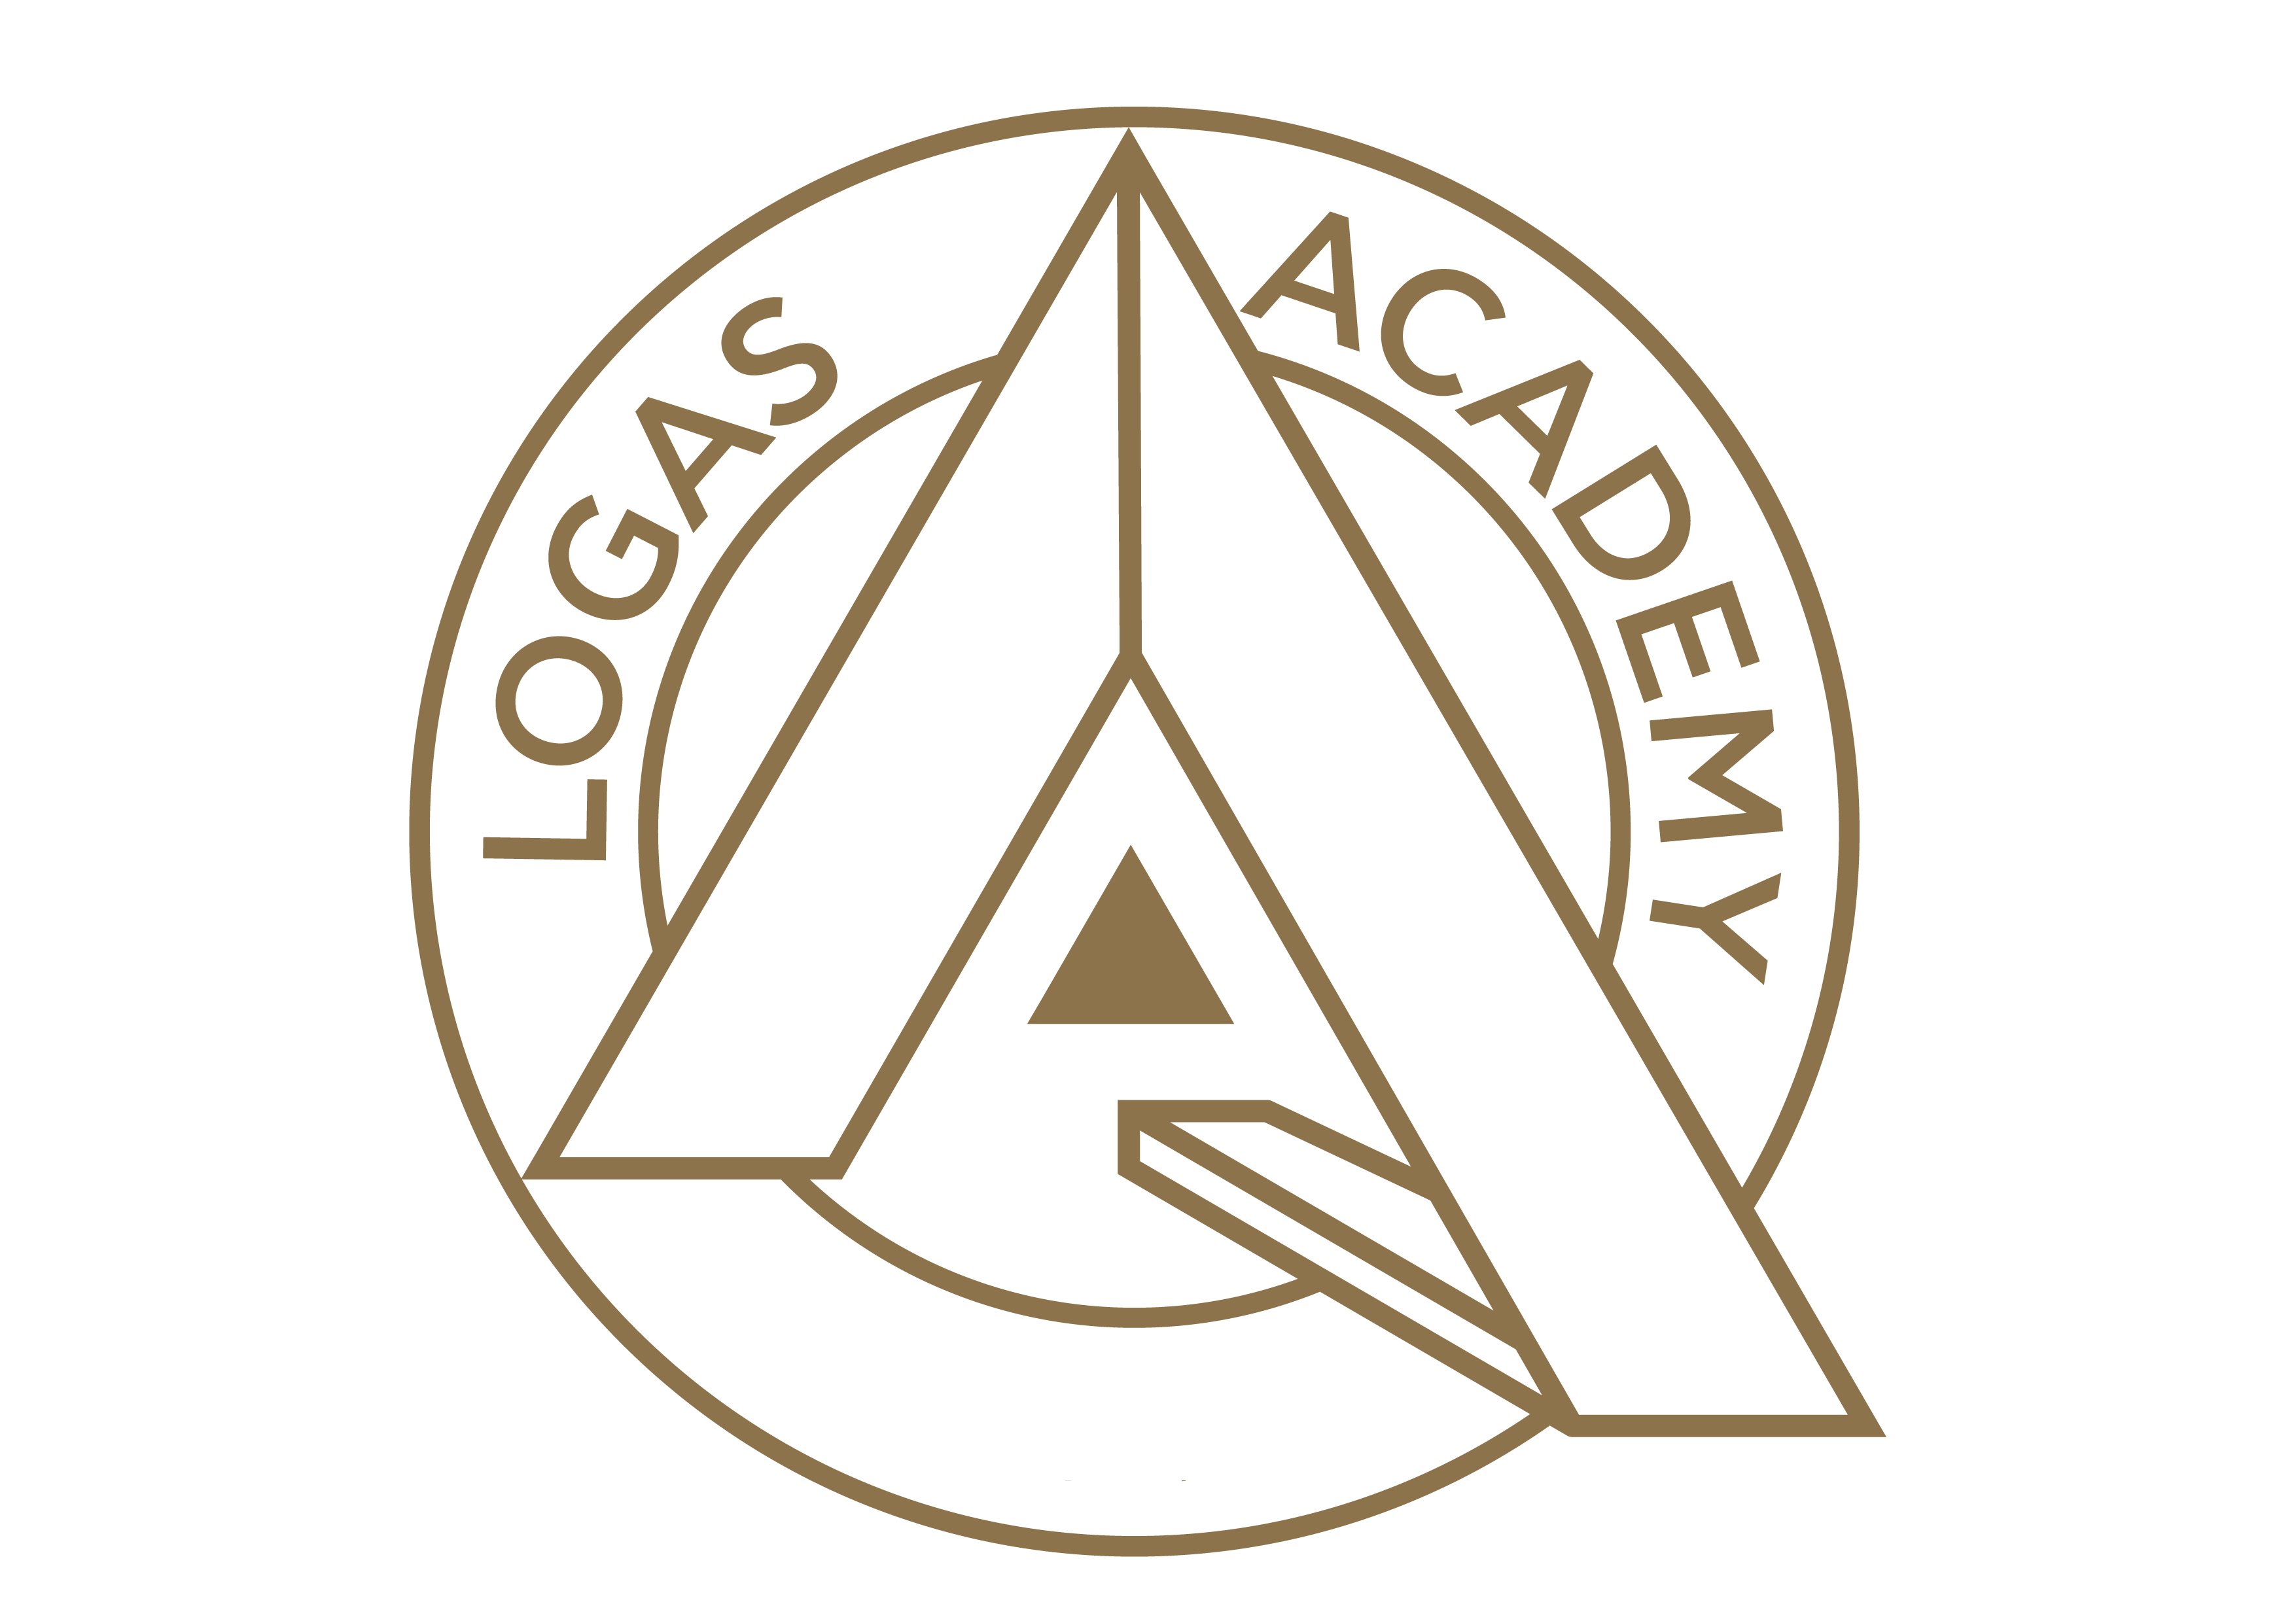 Logas logo